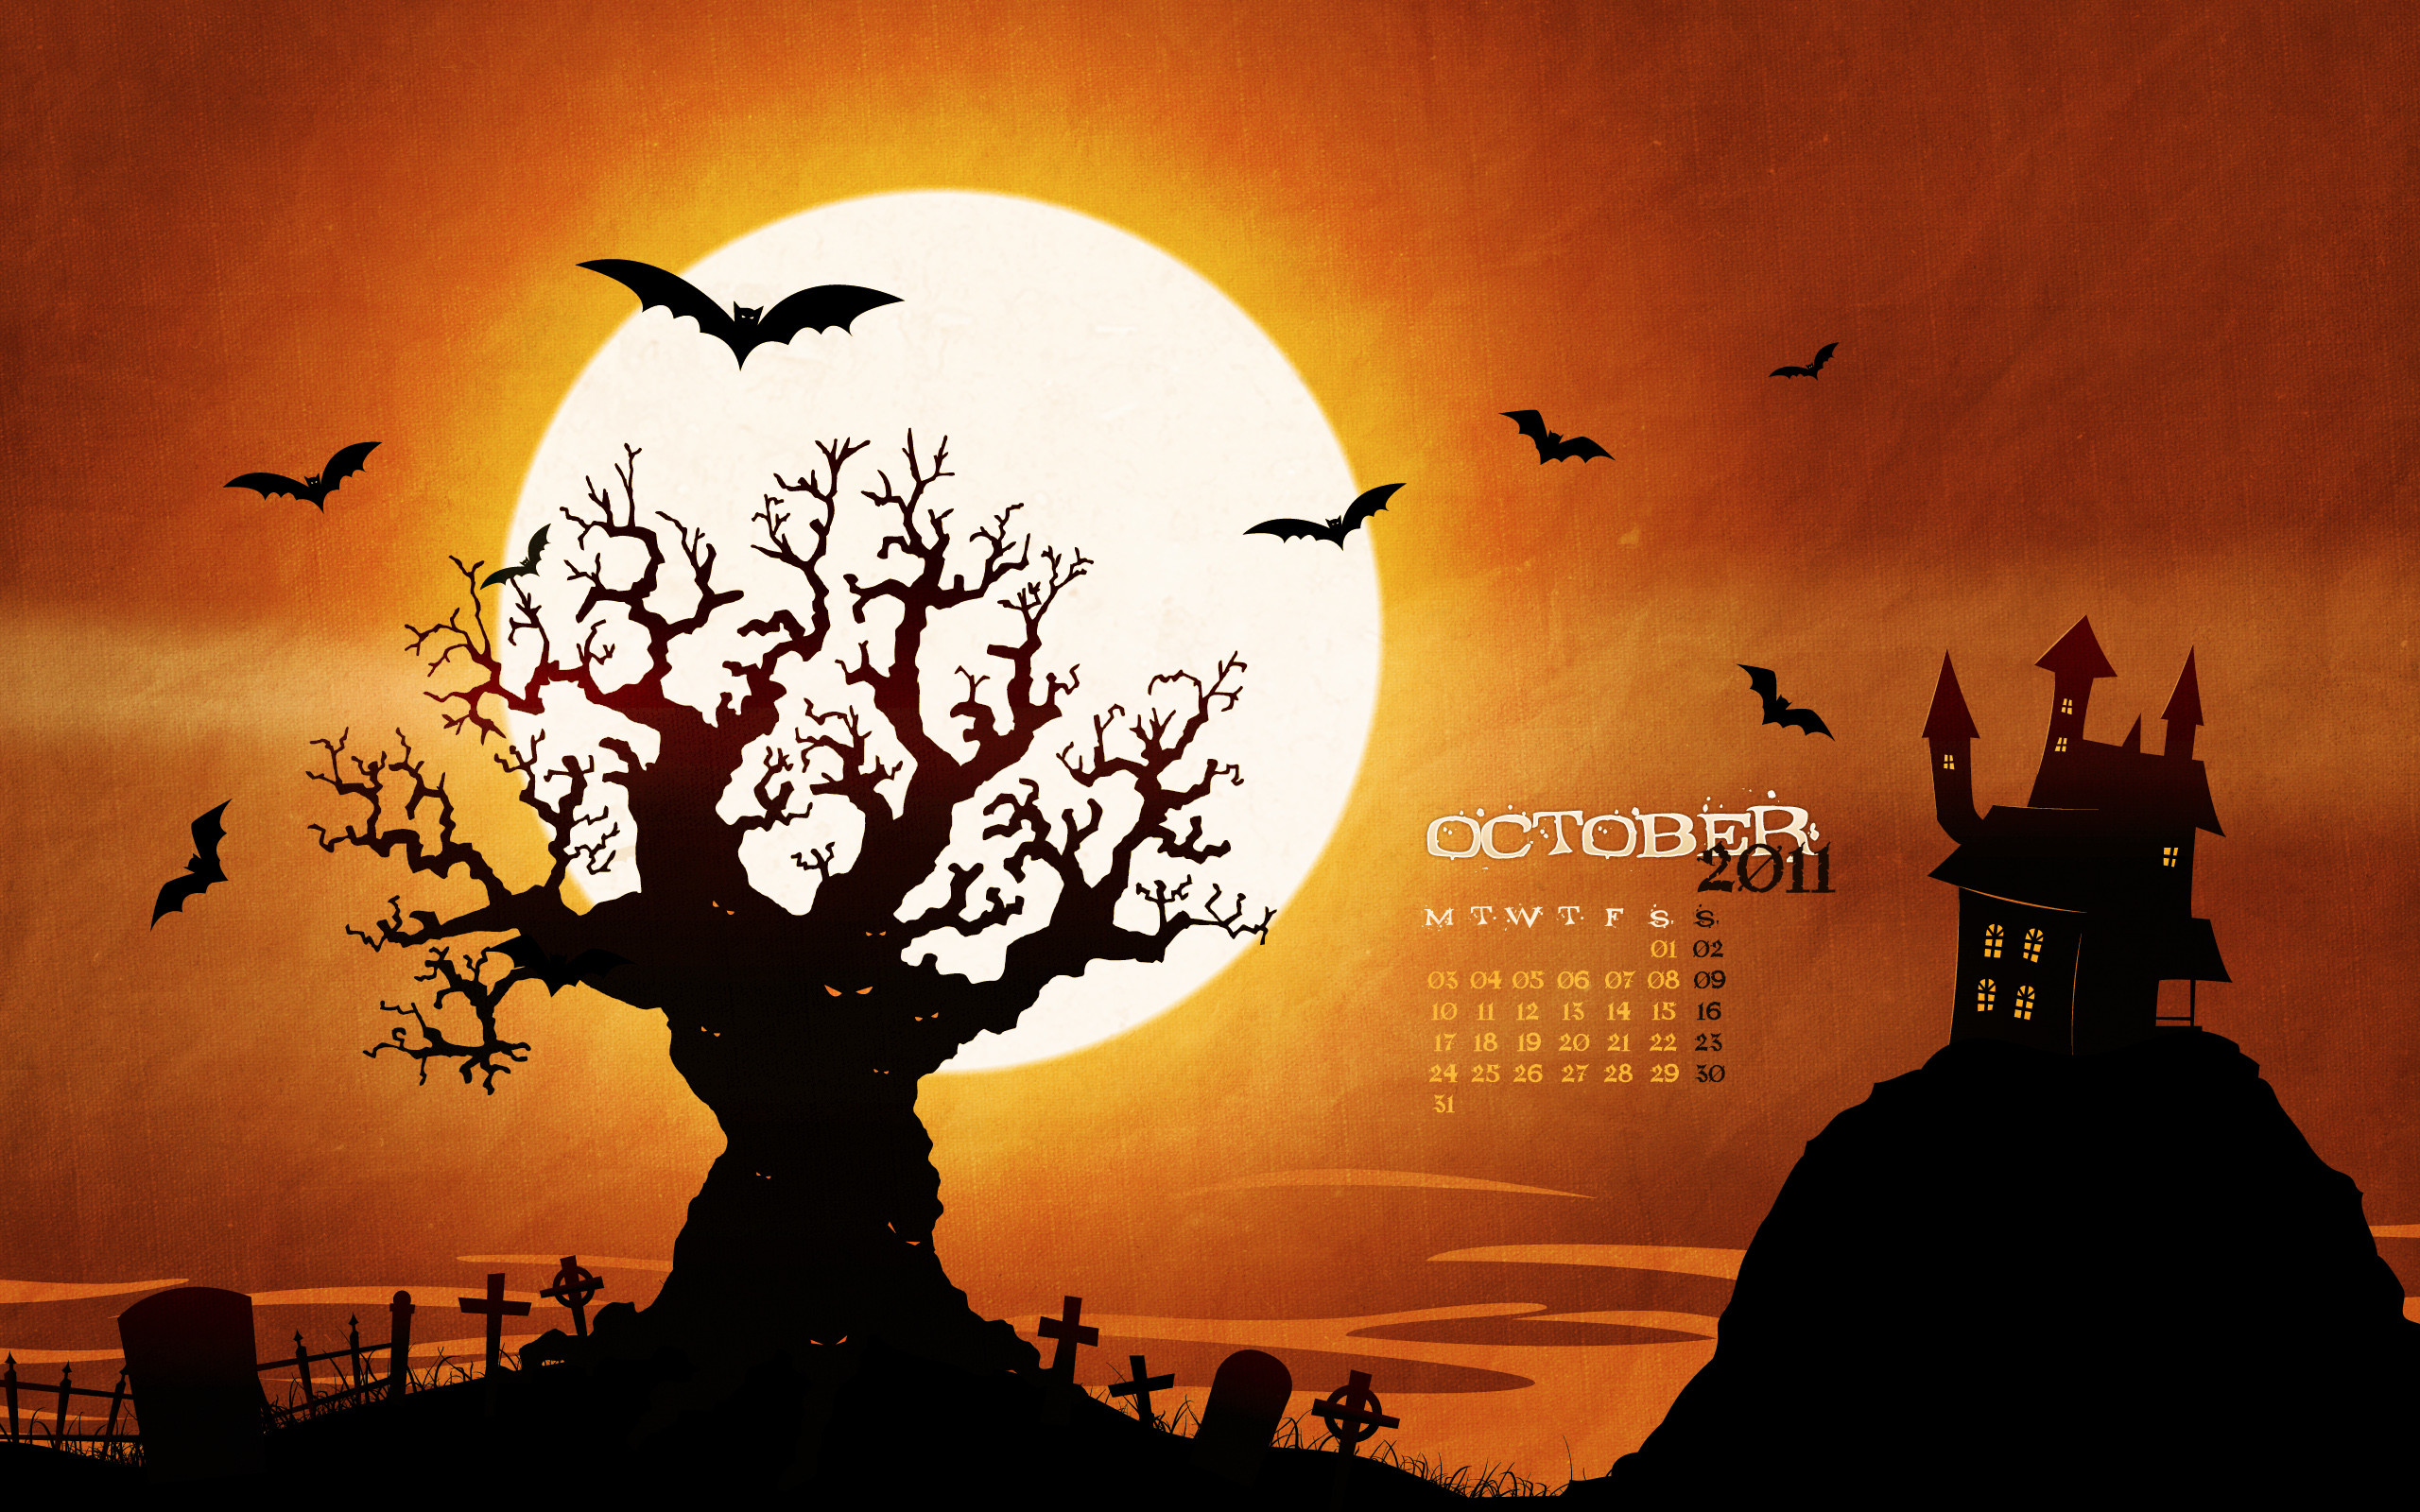 2560x1600 Halloween Spooky Background. “